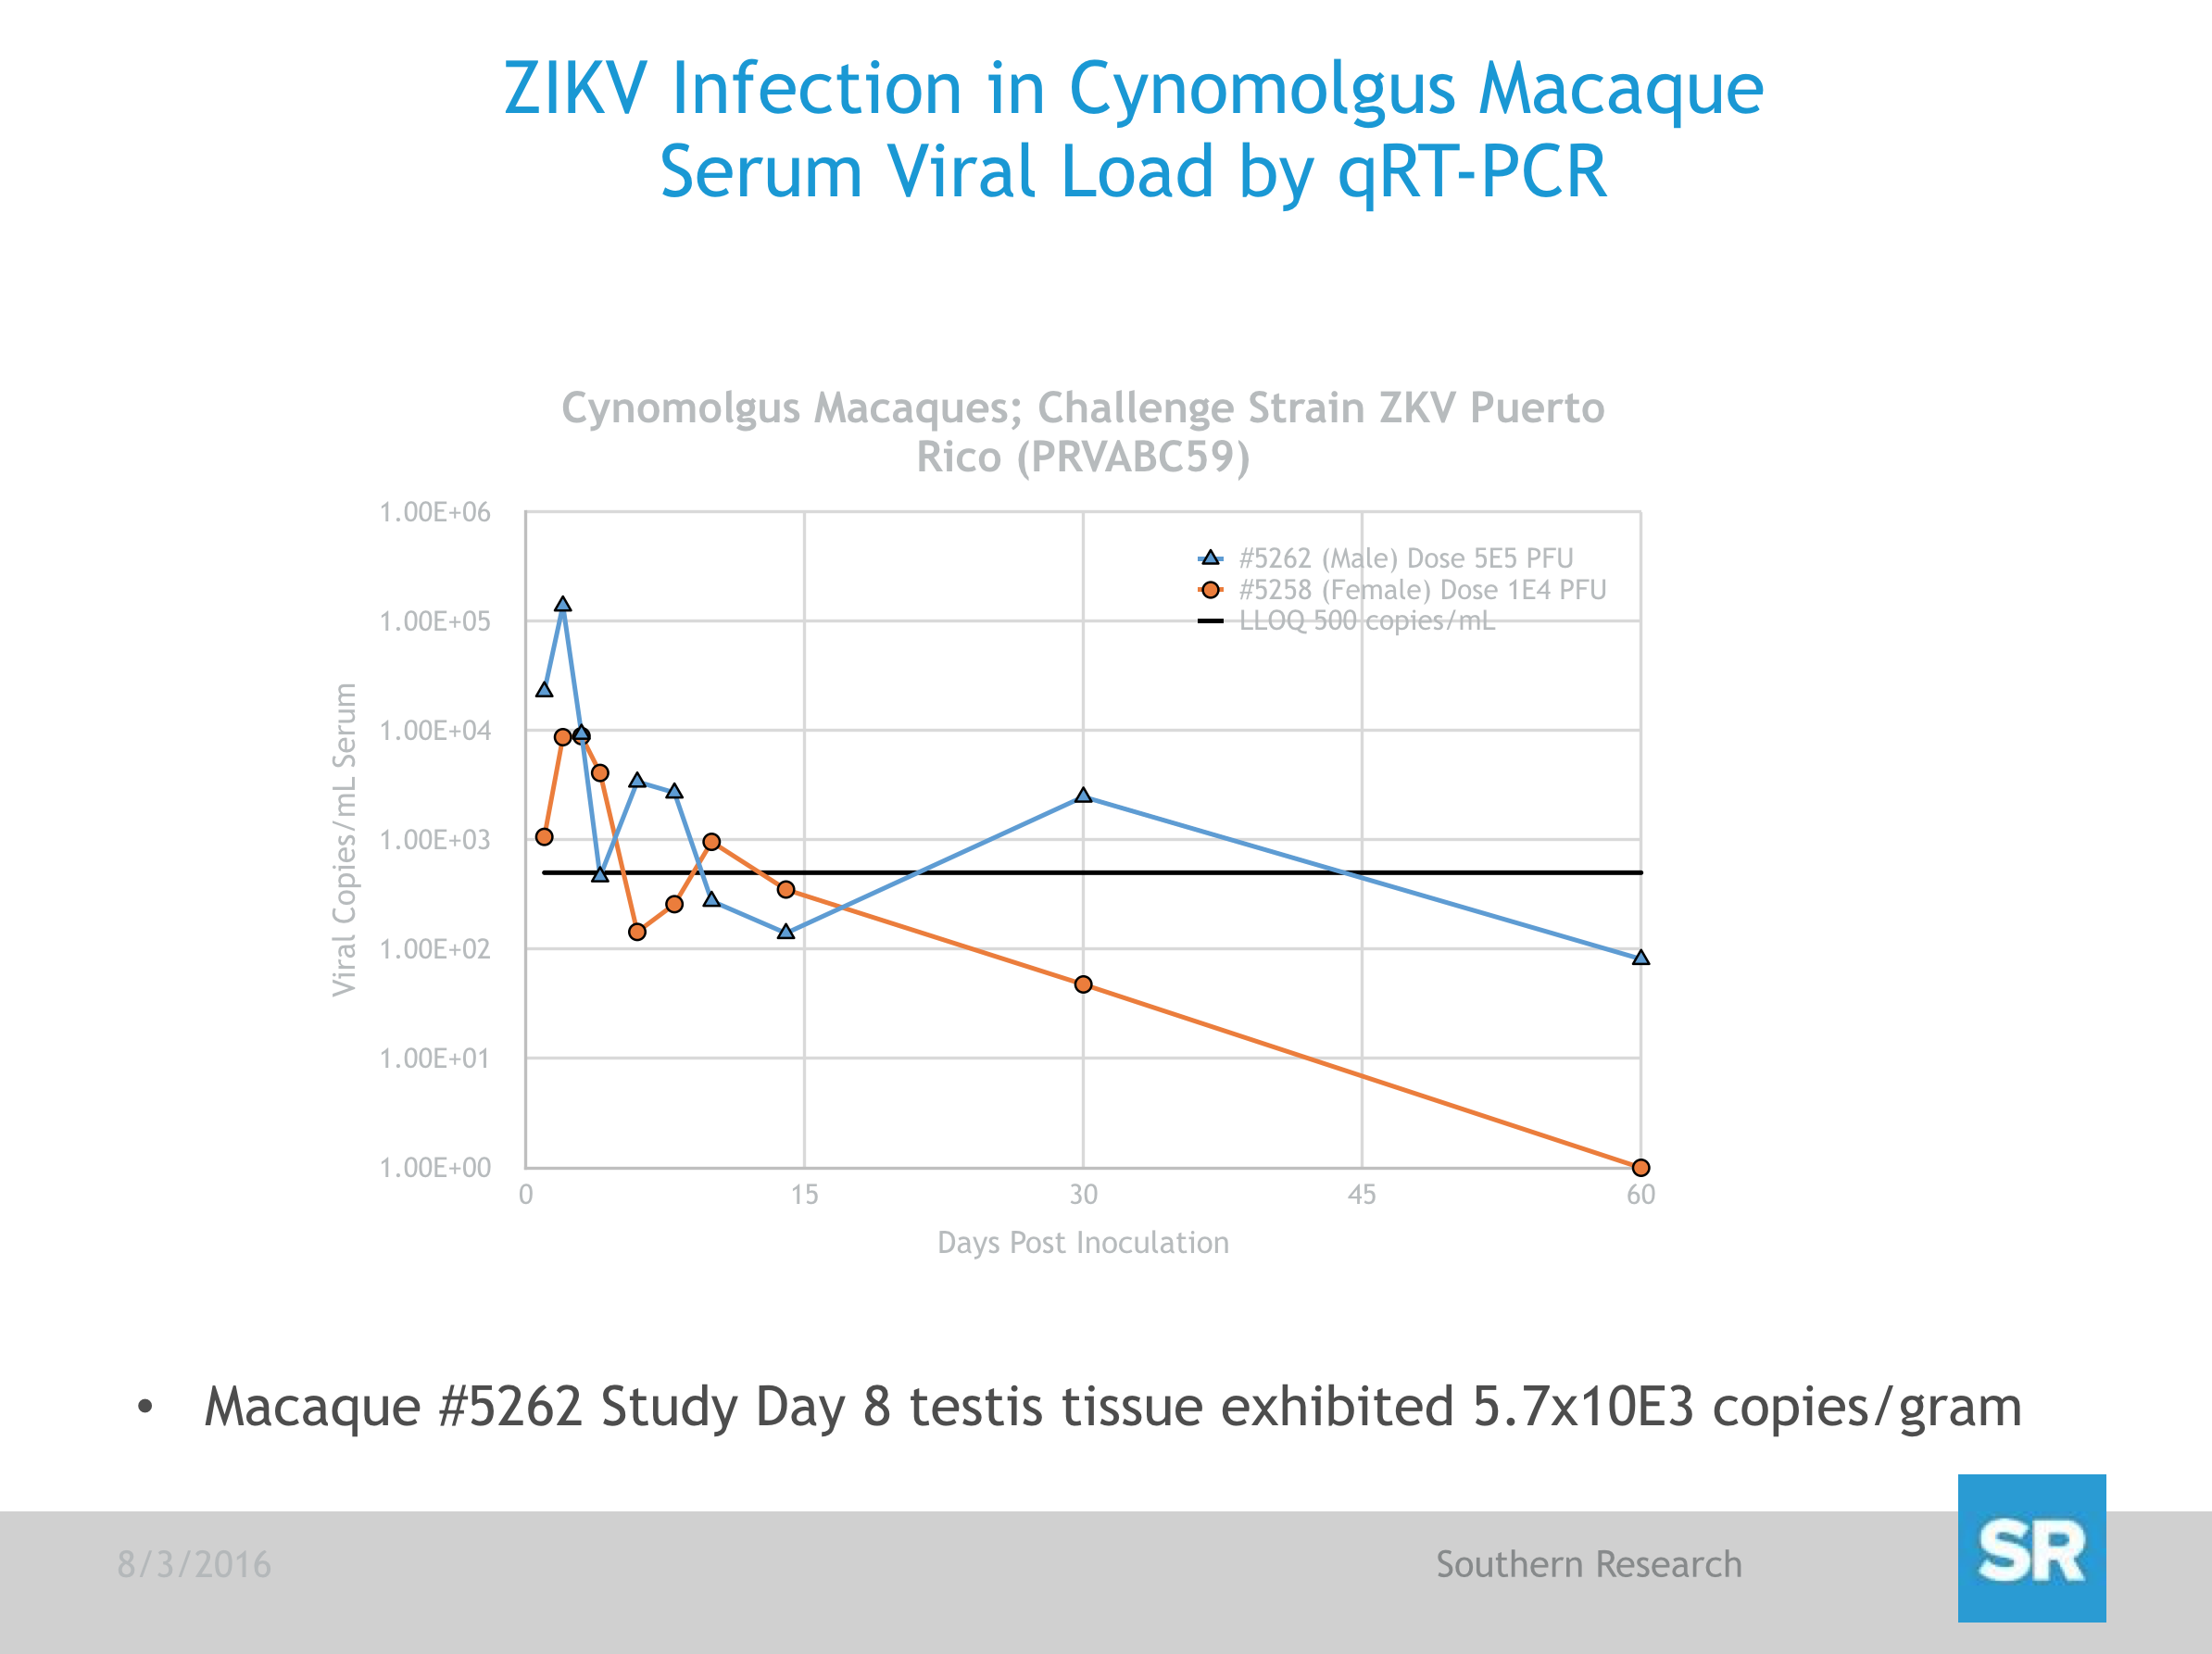 cynomolgus macaque_ZIKV RNA challenged with Puerto Rican strain ZIKV PRVABC59